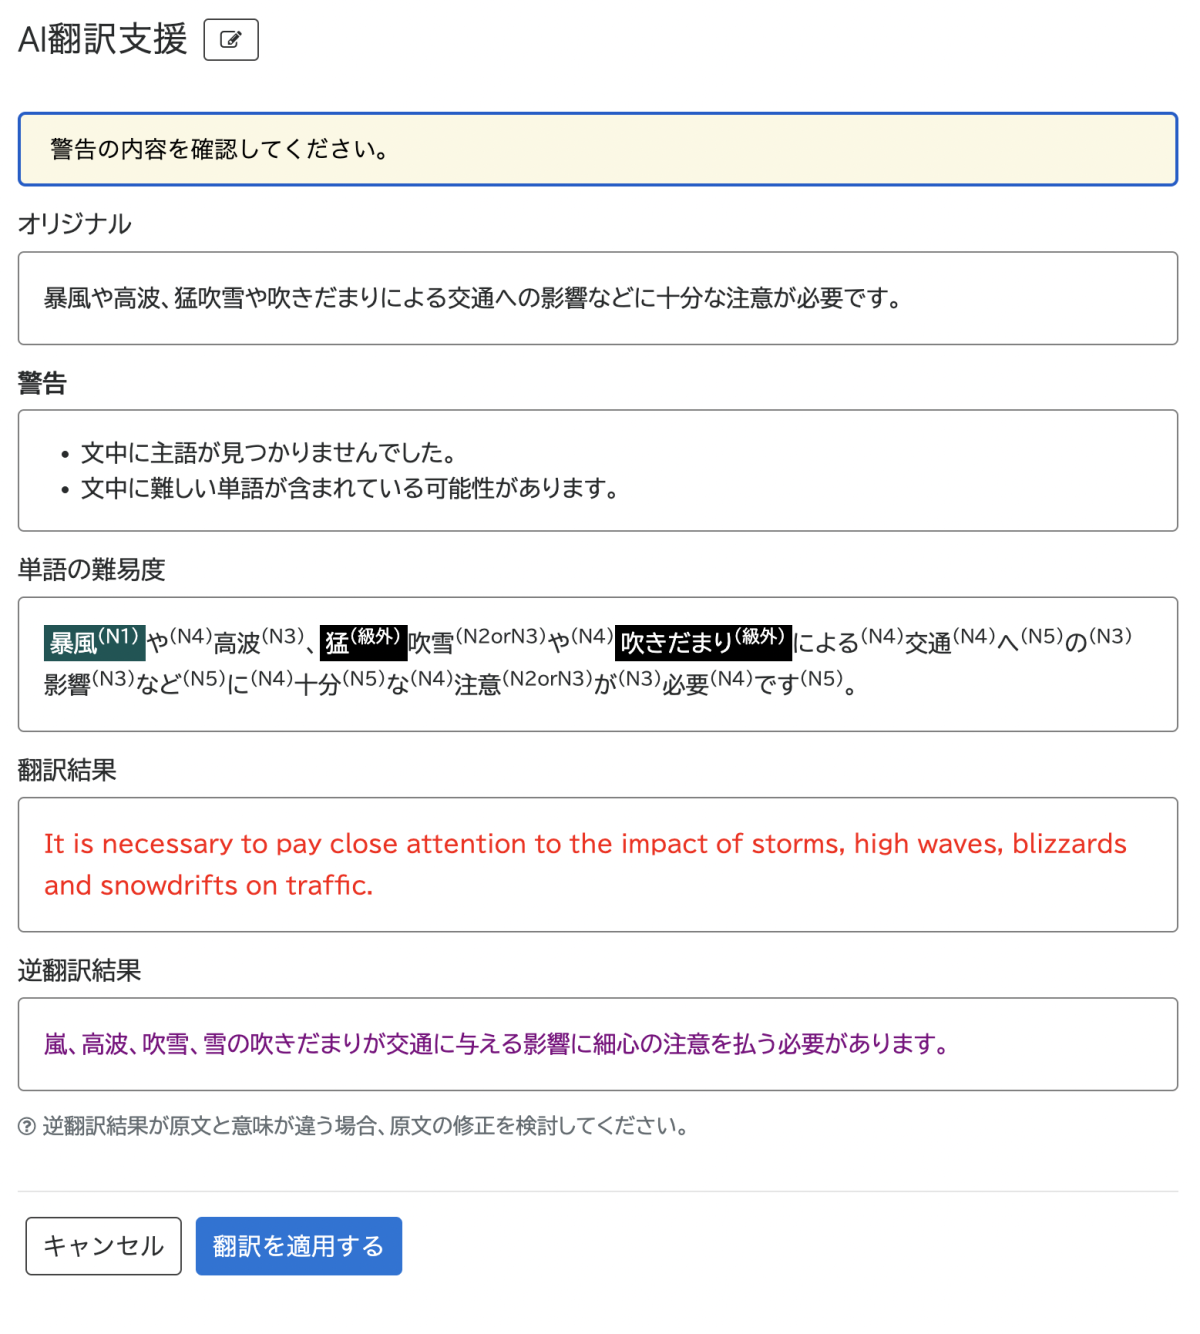 AI翻訳時に誤訳に繋がりやすい表現を指摘、逆翻訳の結果を提示